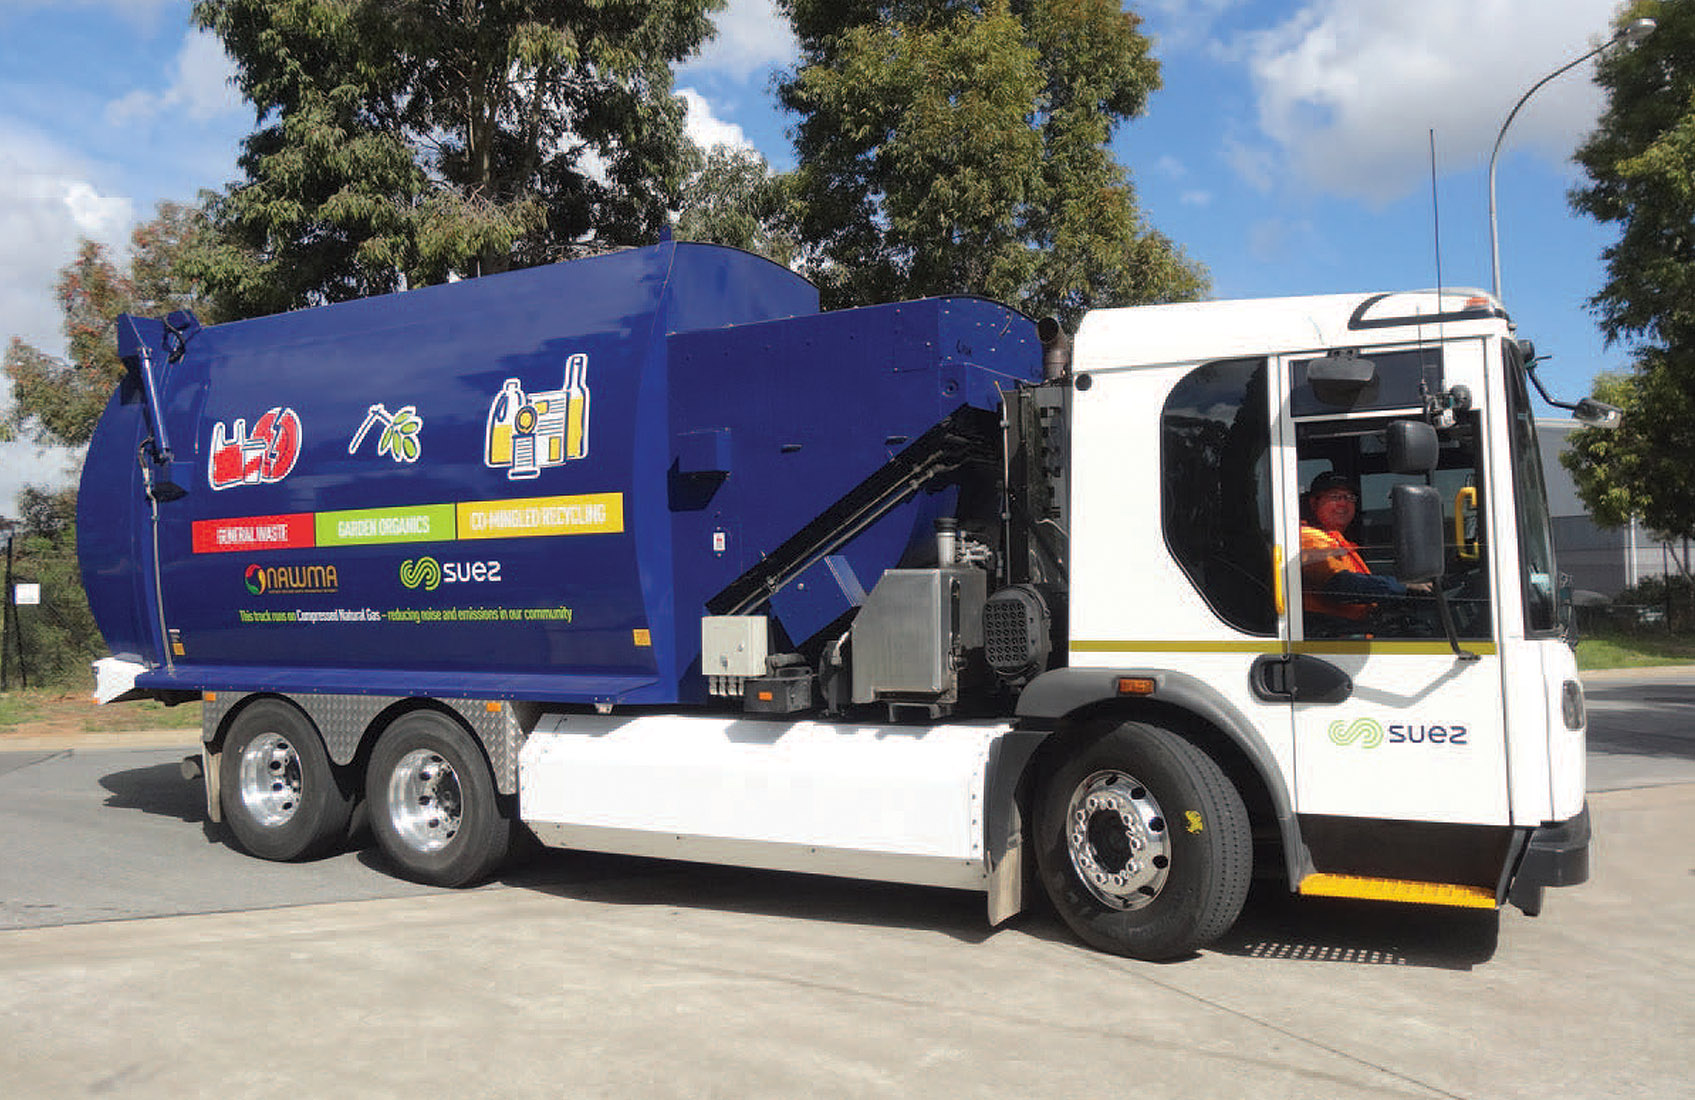 NAWMA - Northern Adelaide Waste Management Authority